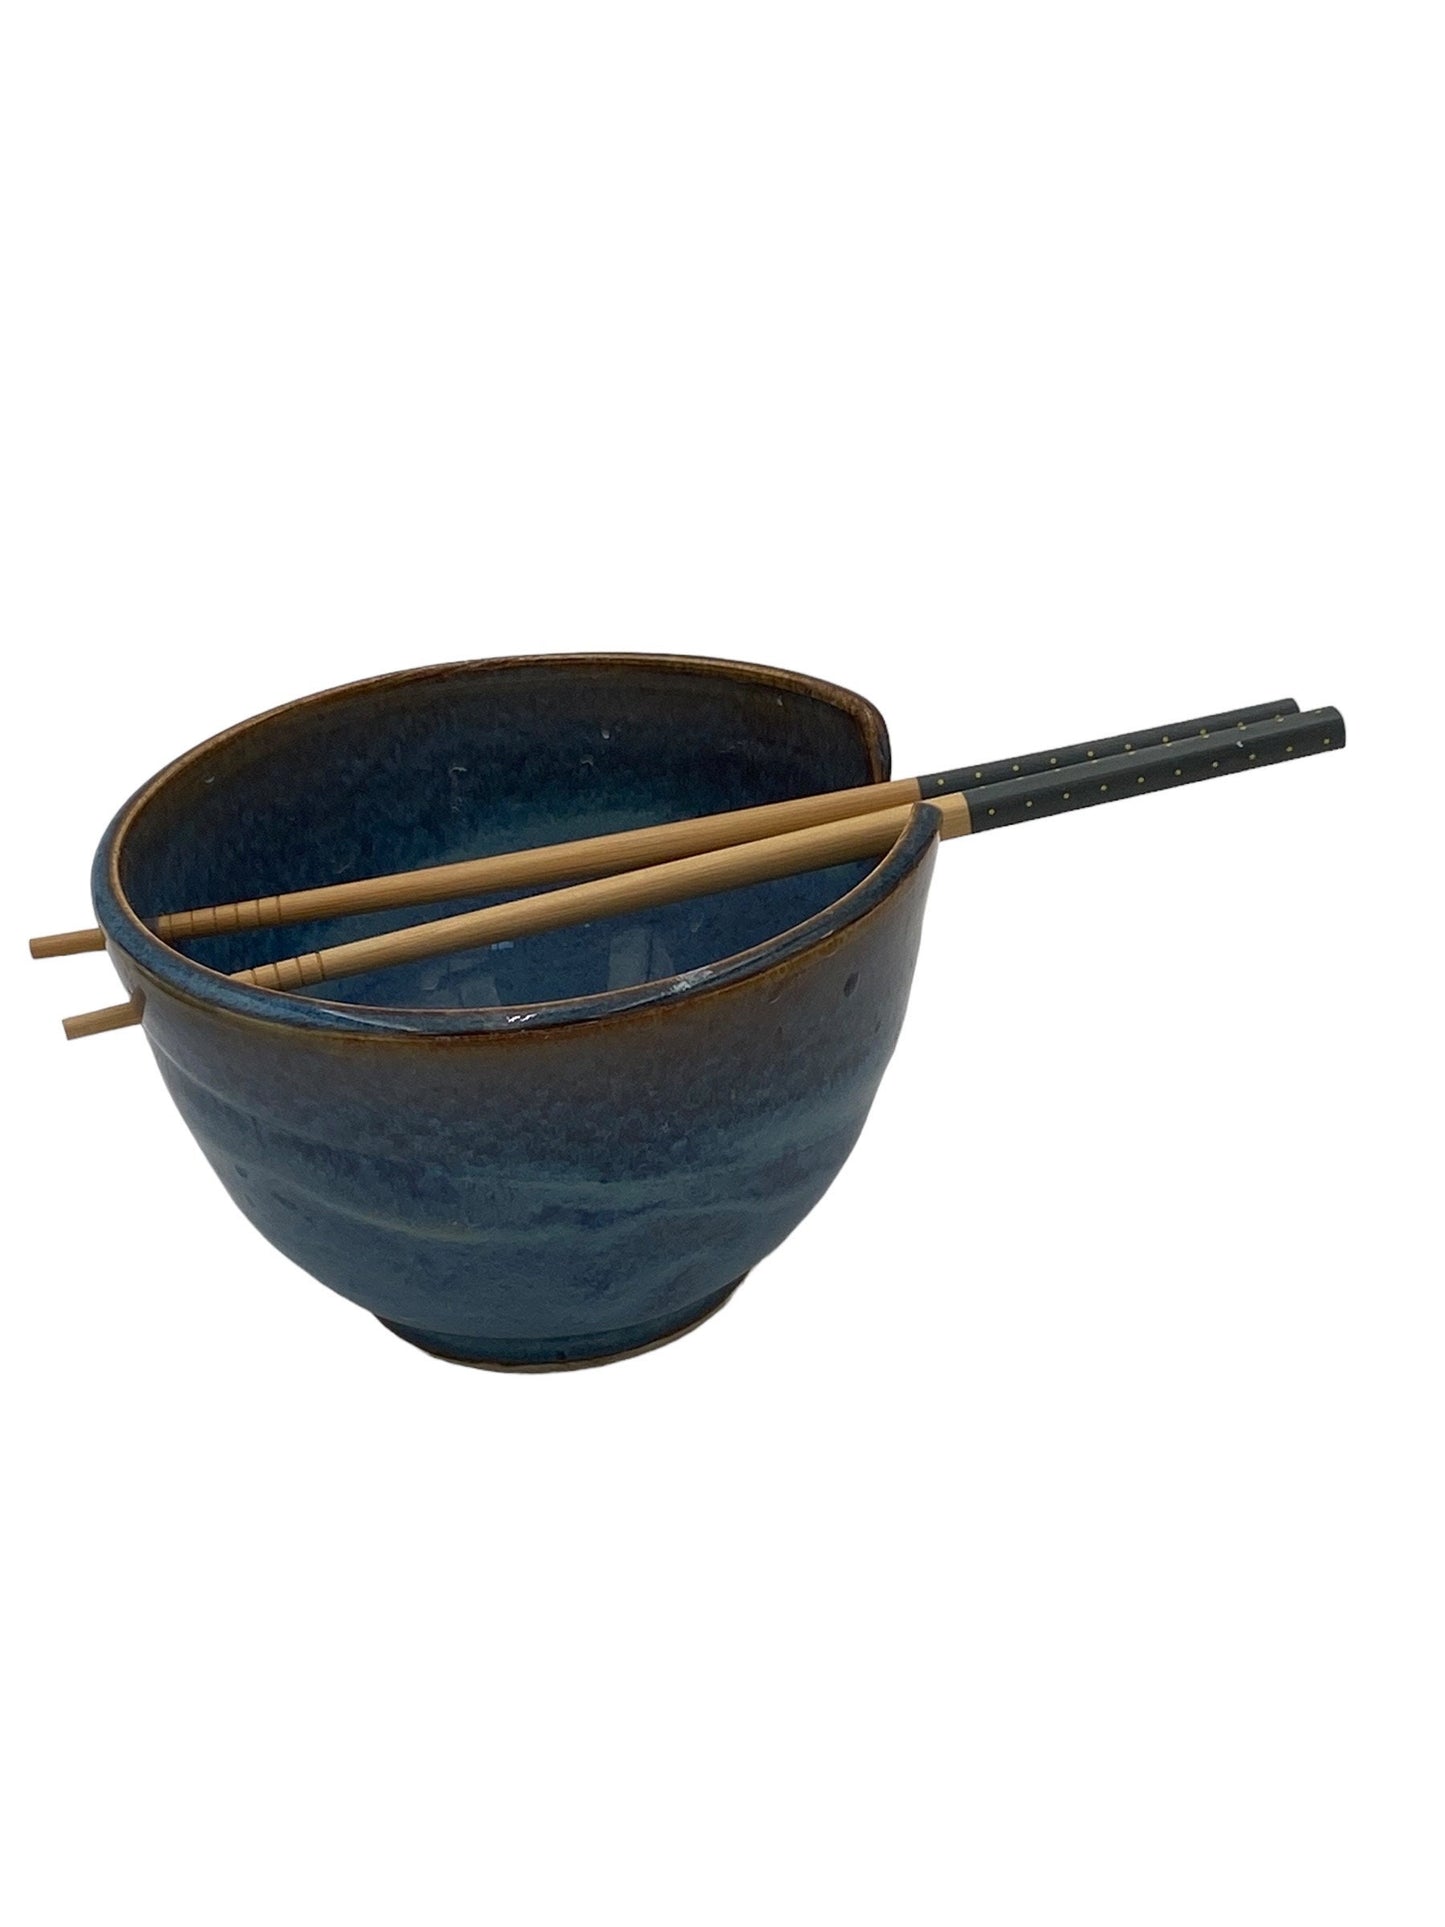 Small Blue Ramen Bowl with coordinating Chop Sticks